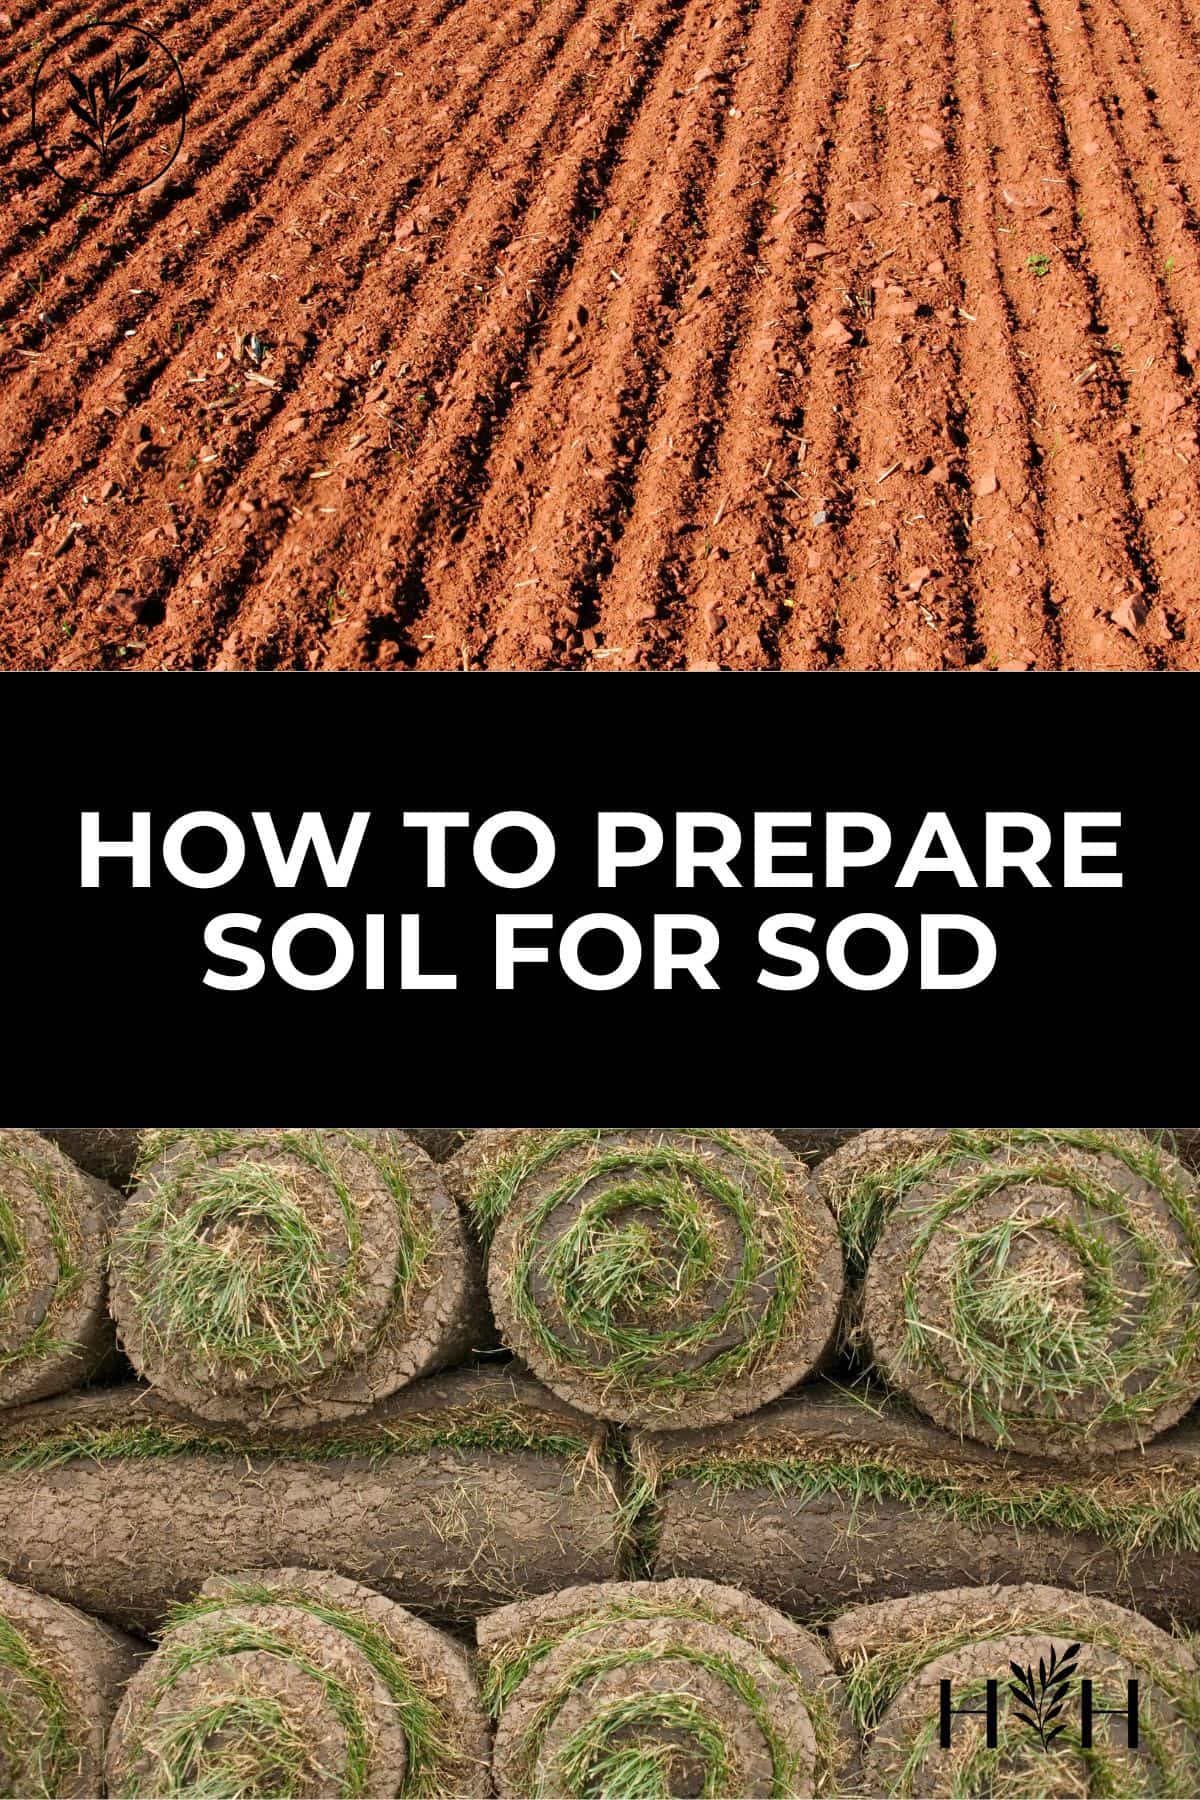 How to prepare soil for sod via @home4theharvest